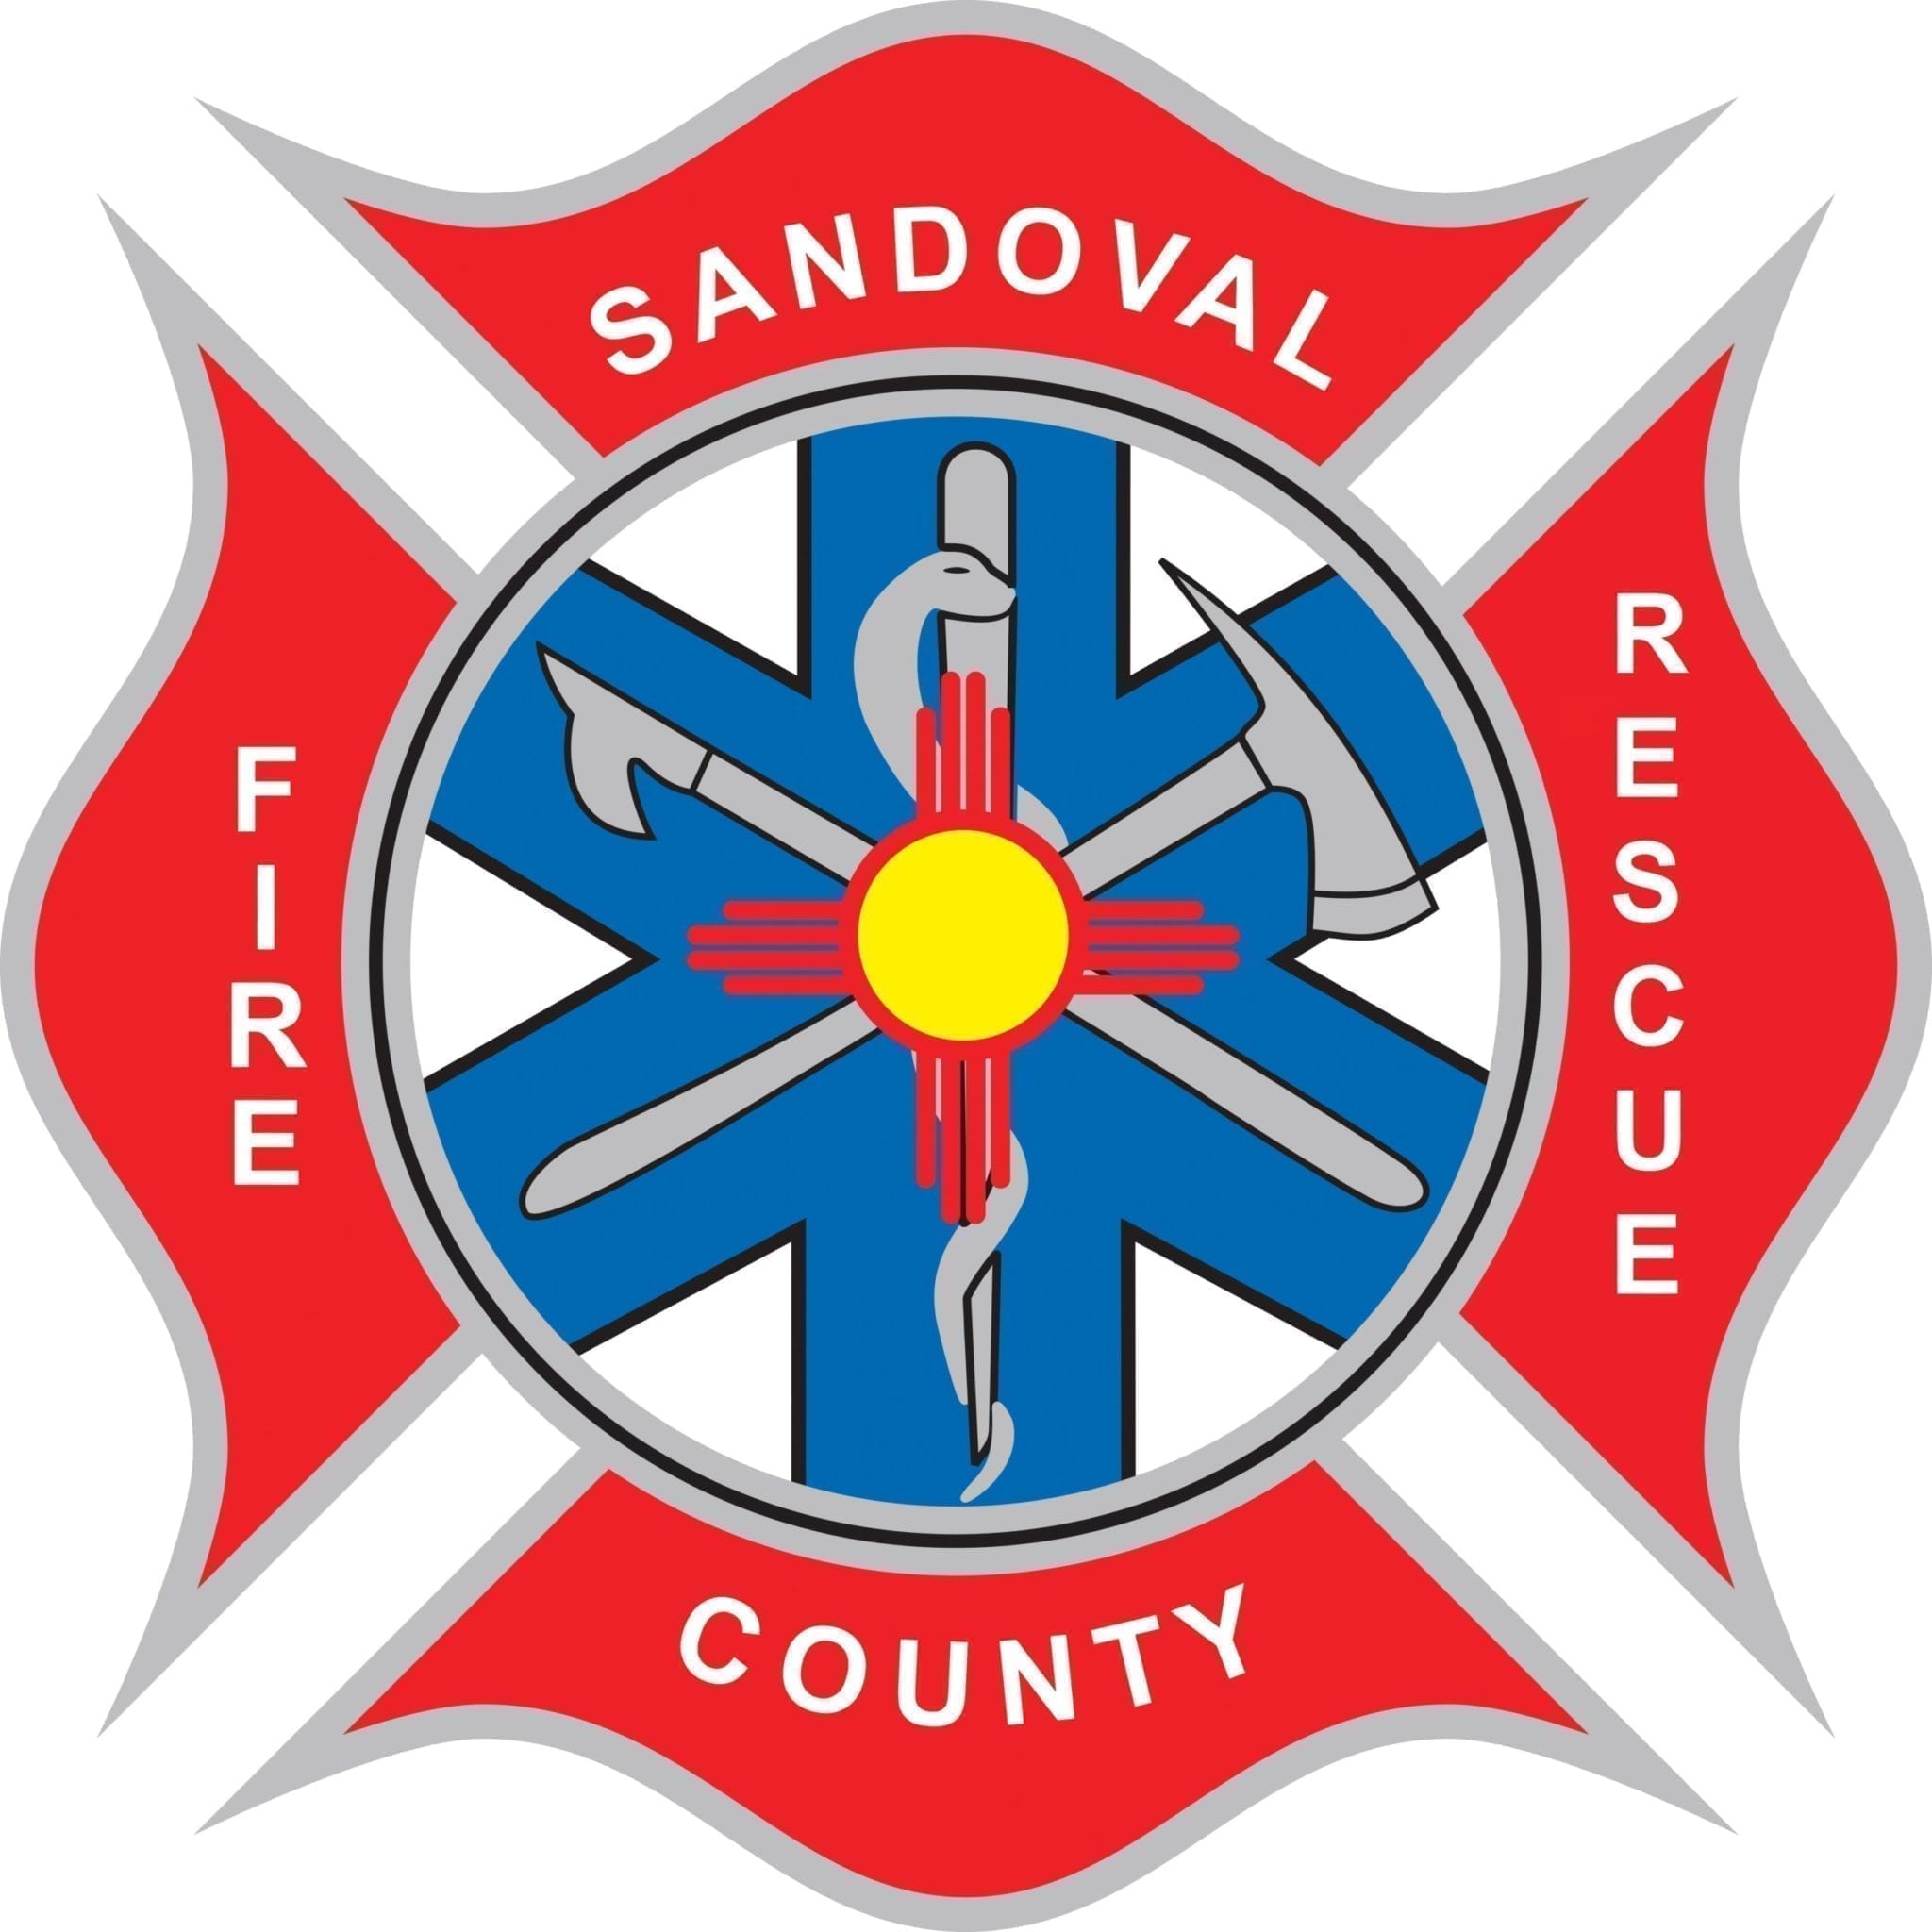 Sandoval County Fire logo